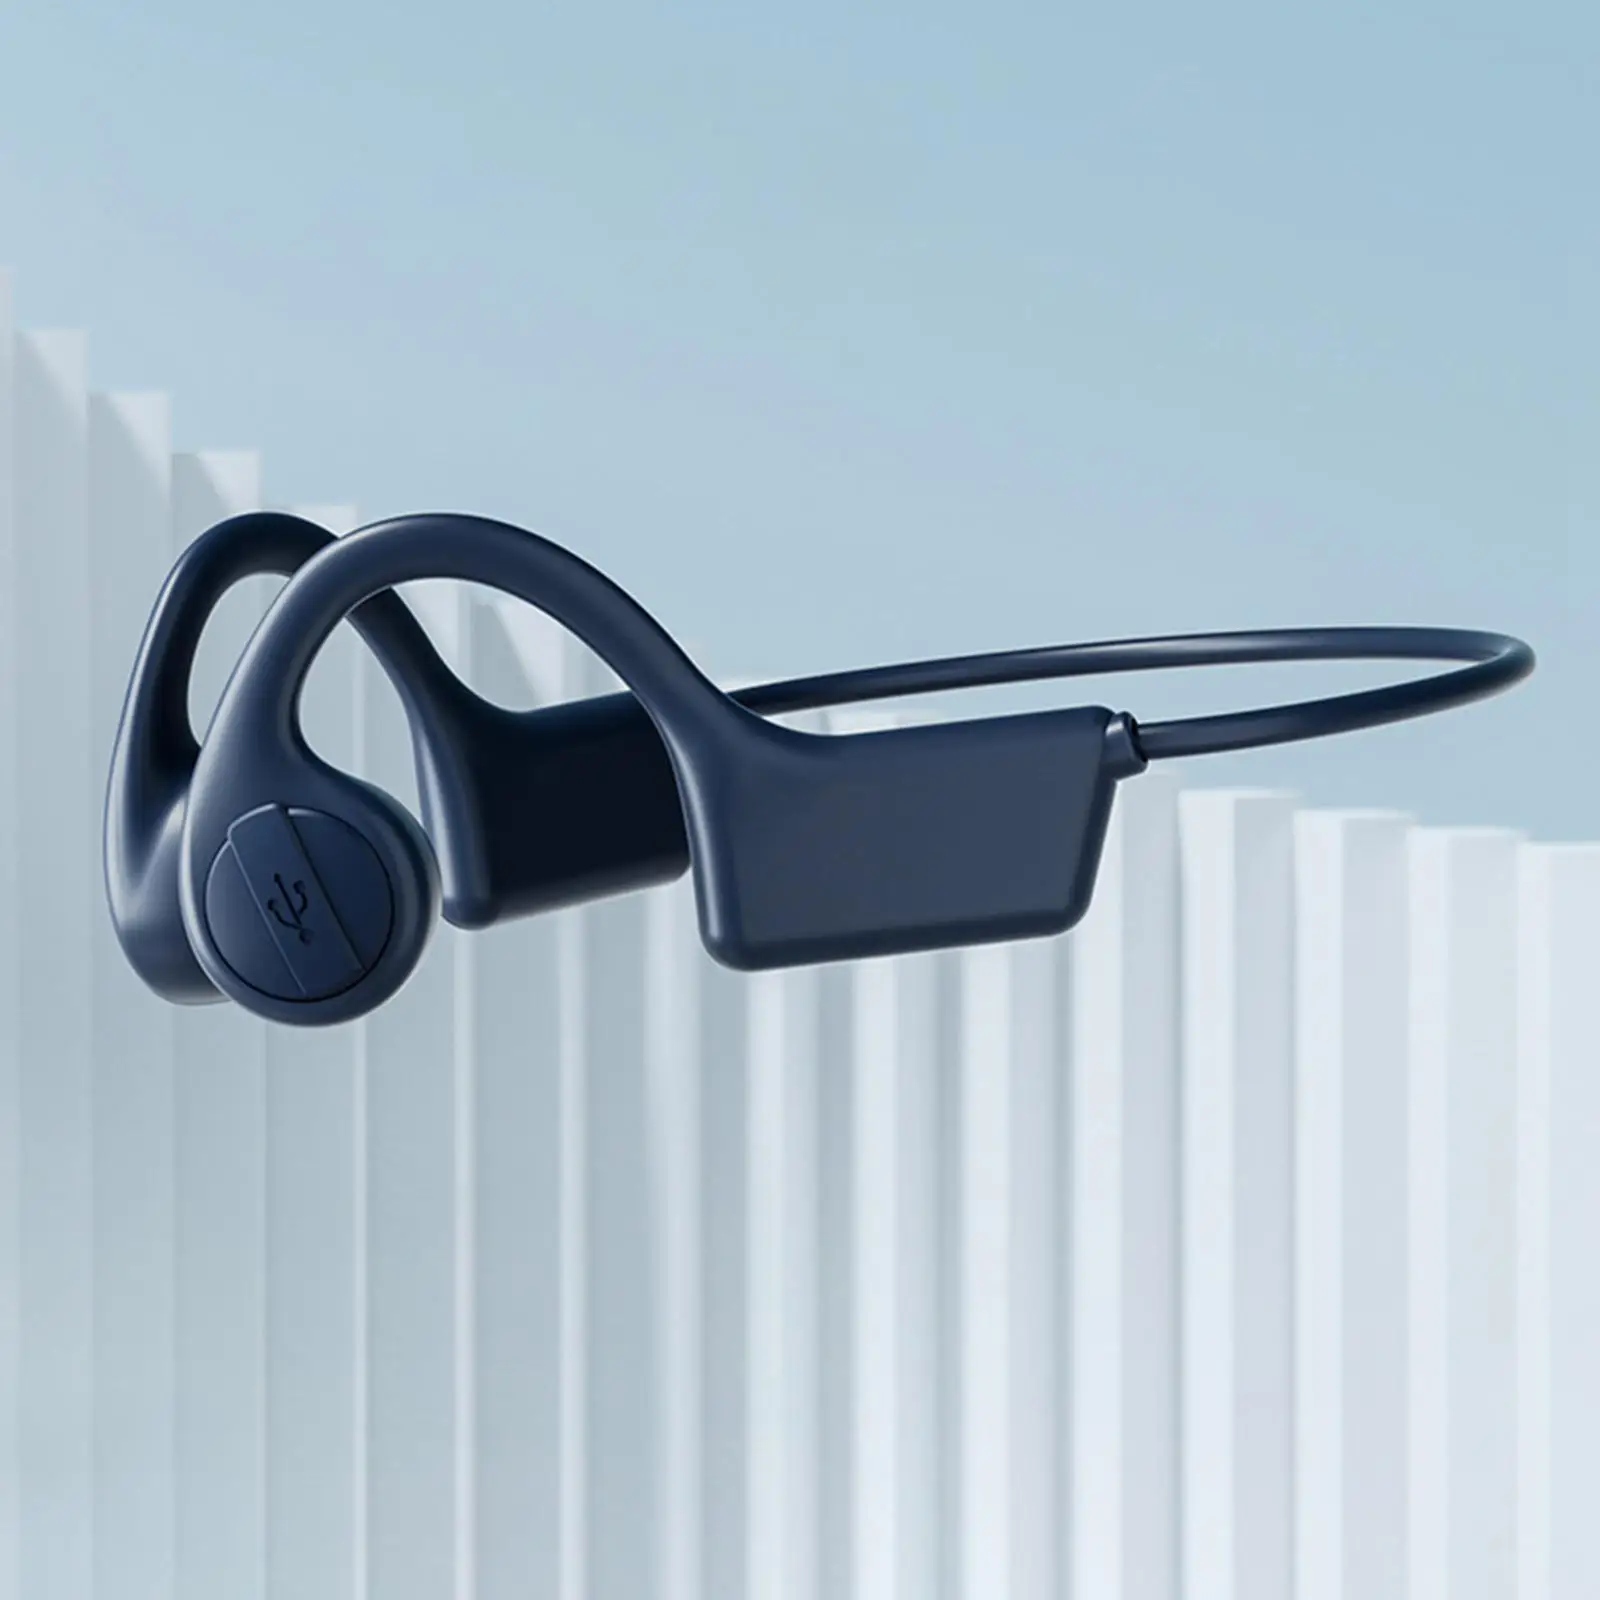 Bluetooth Headphone Bone Conduction 5.0 with Mic Titanium Lightweight Headset for Hiking